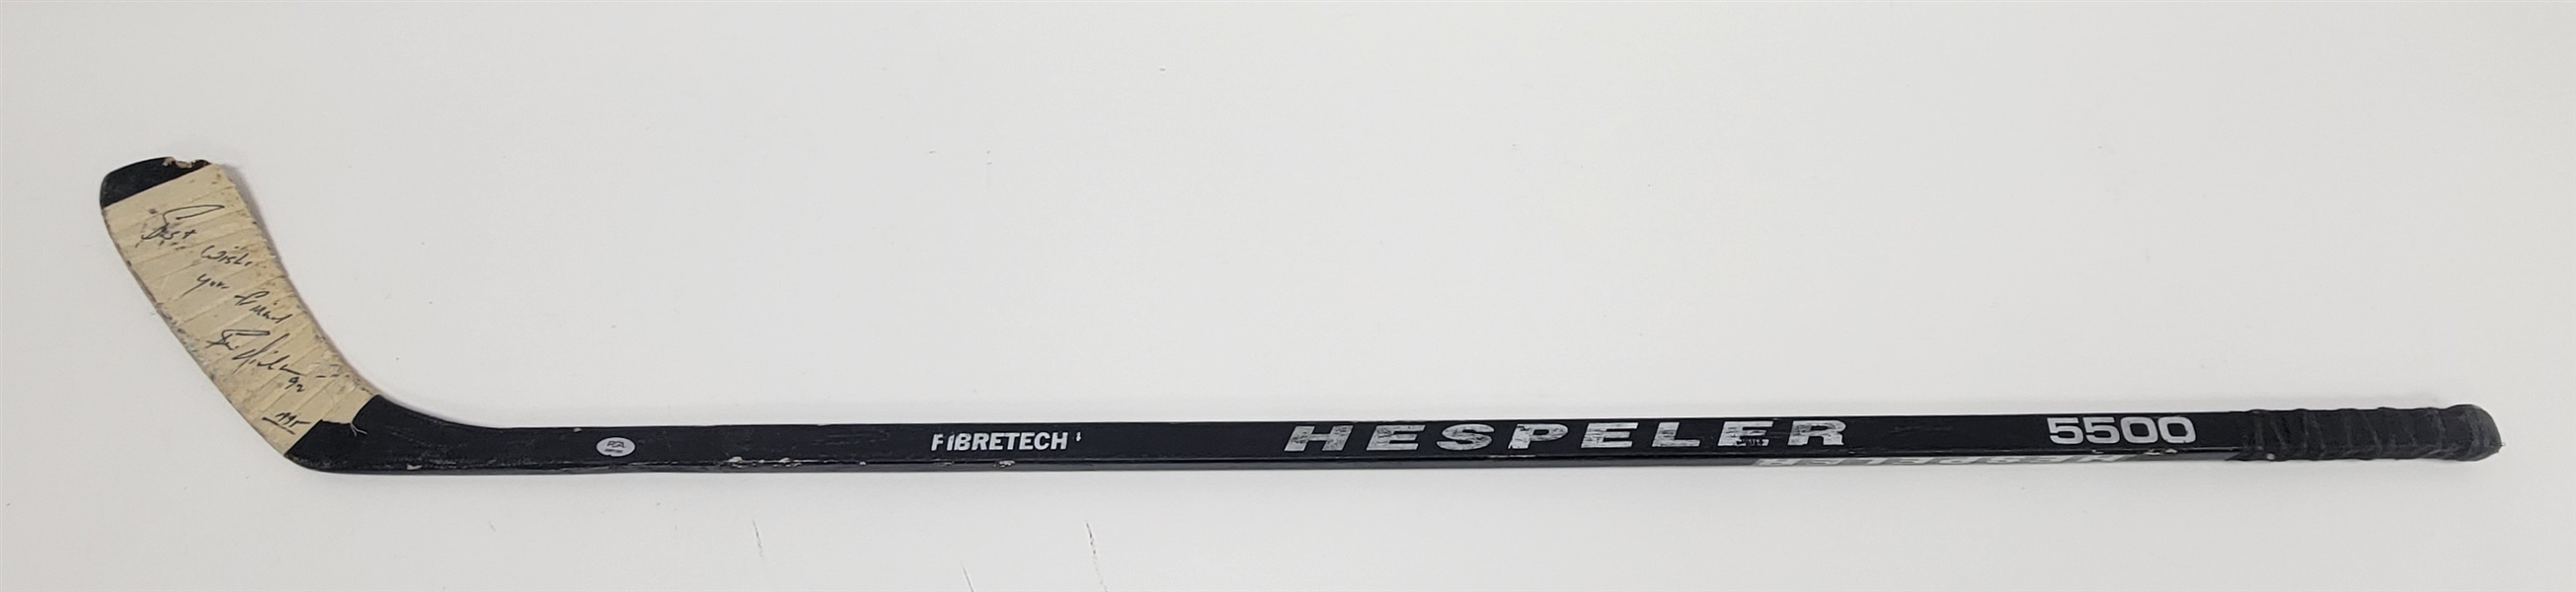 Bernie Nicholls Game Used & Autographed Hockey Stick PSA/DNA